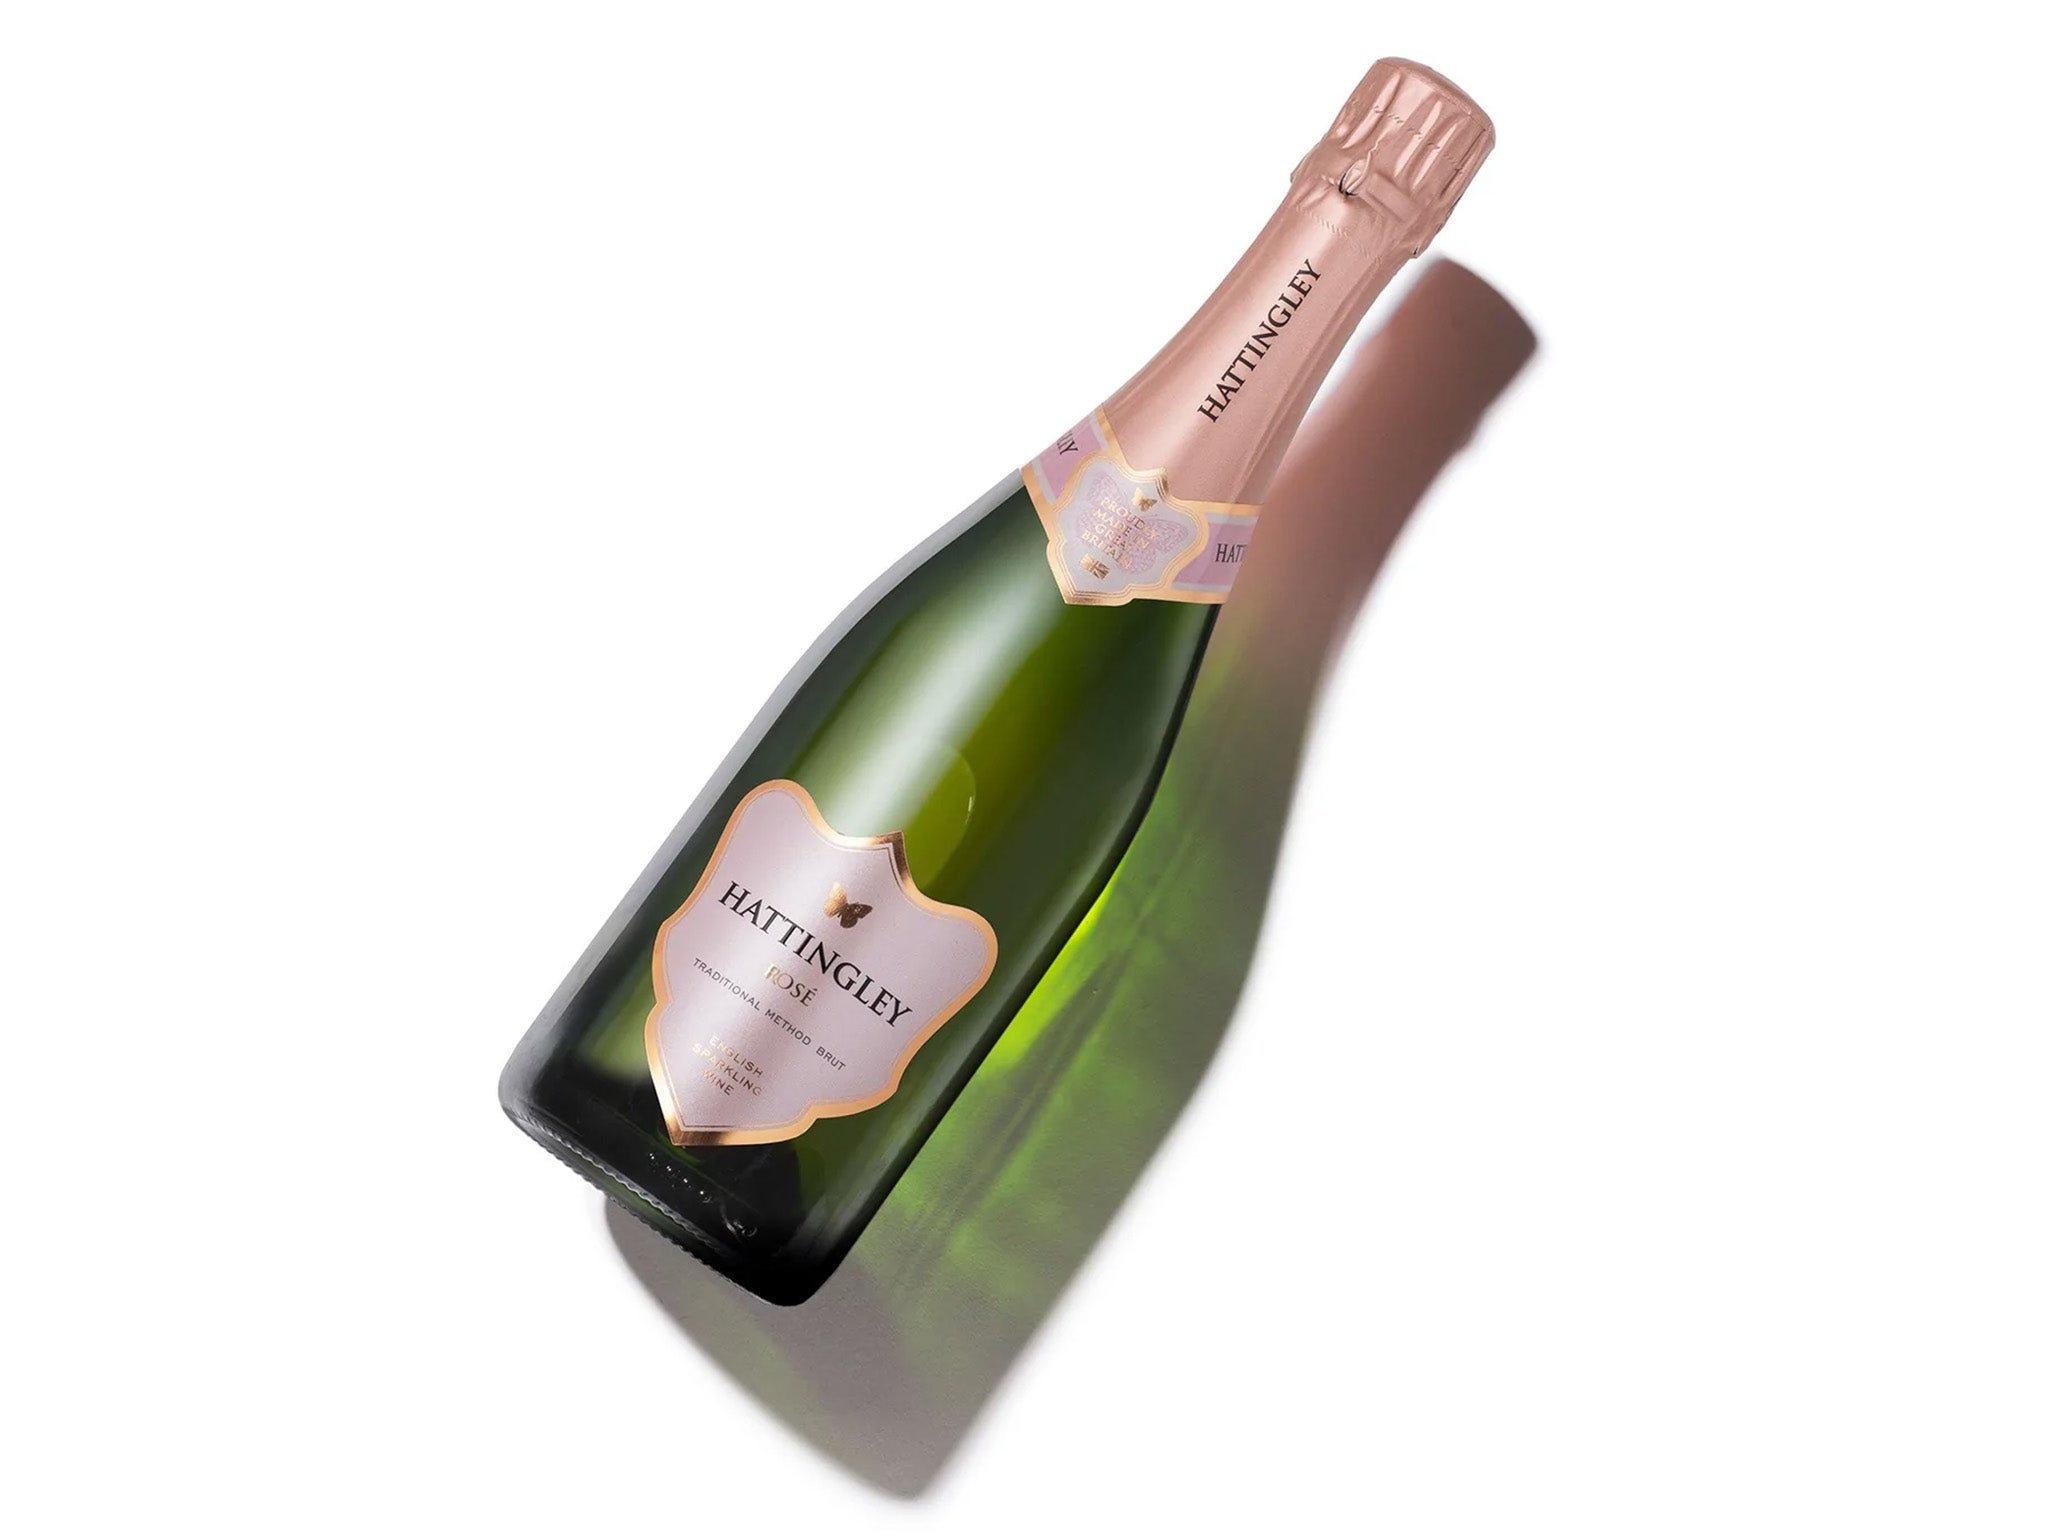 Hattington Valley 2019 rose champagne, 12%